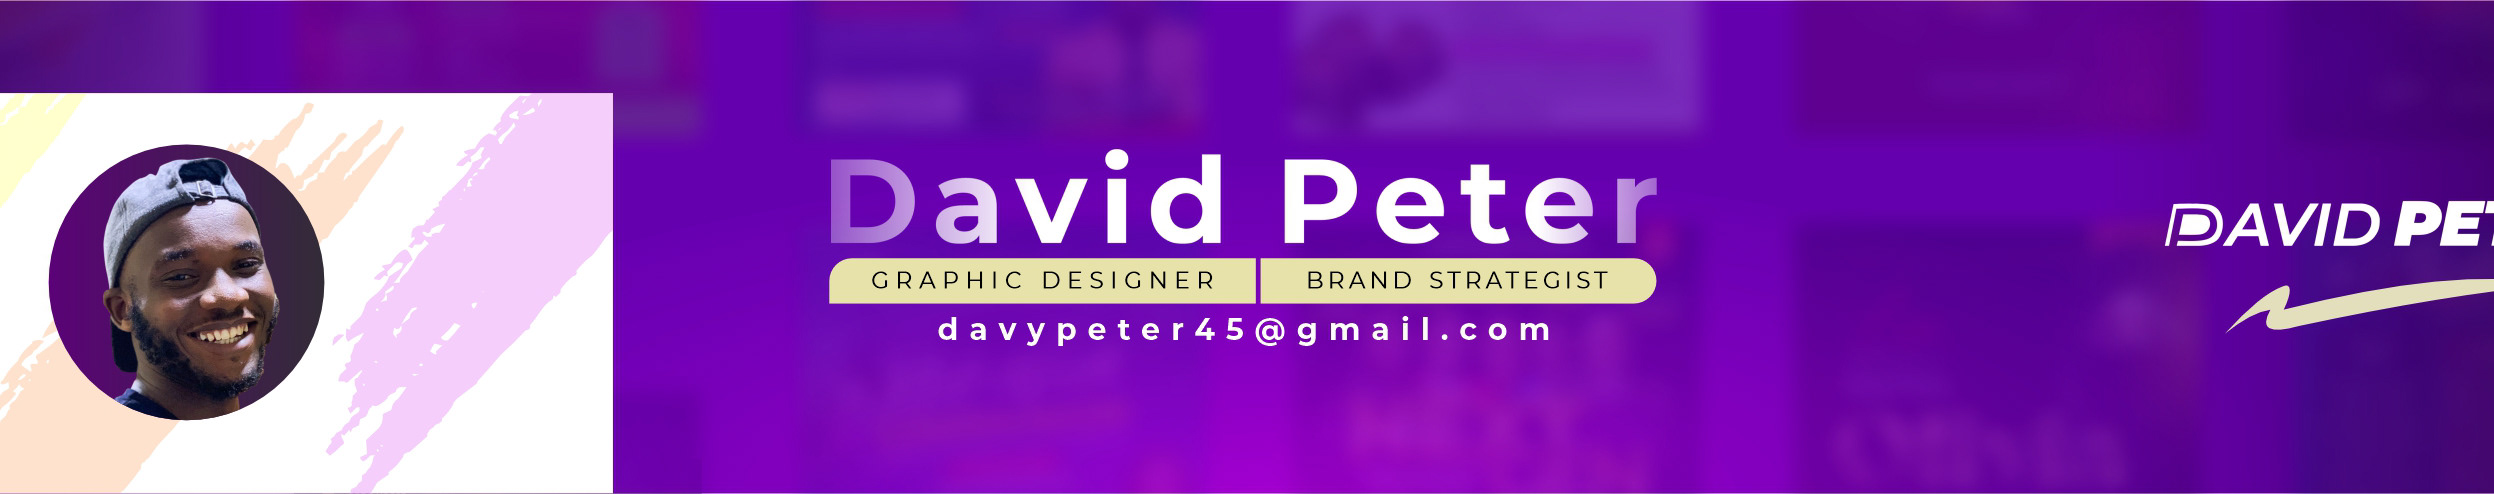 David Peters profilbanner